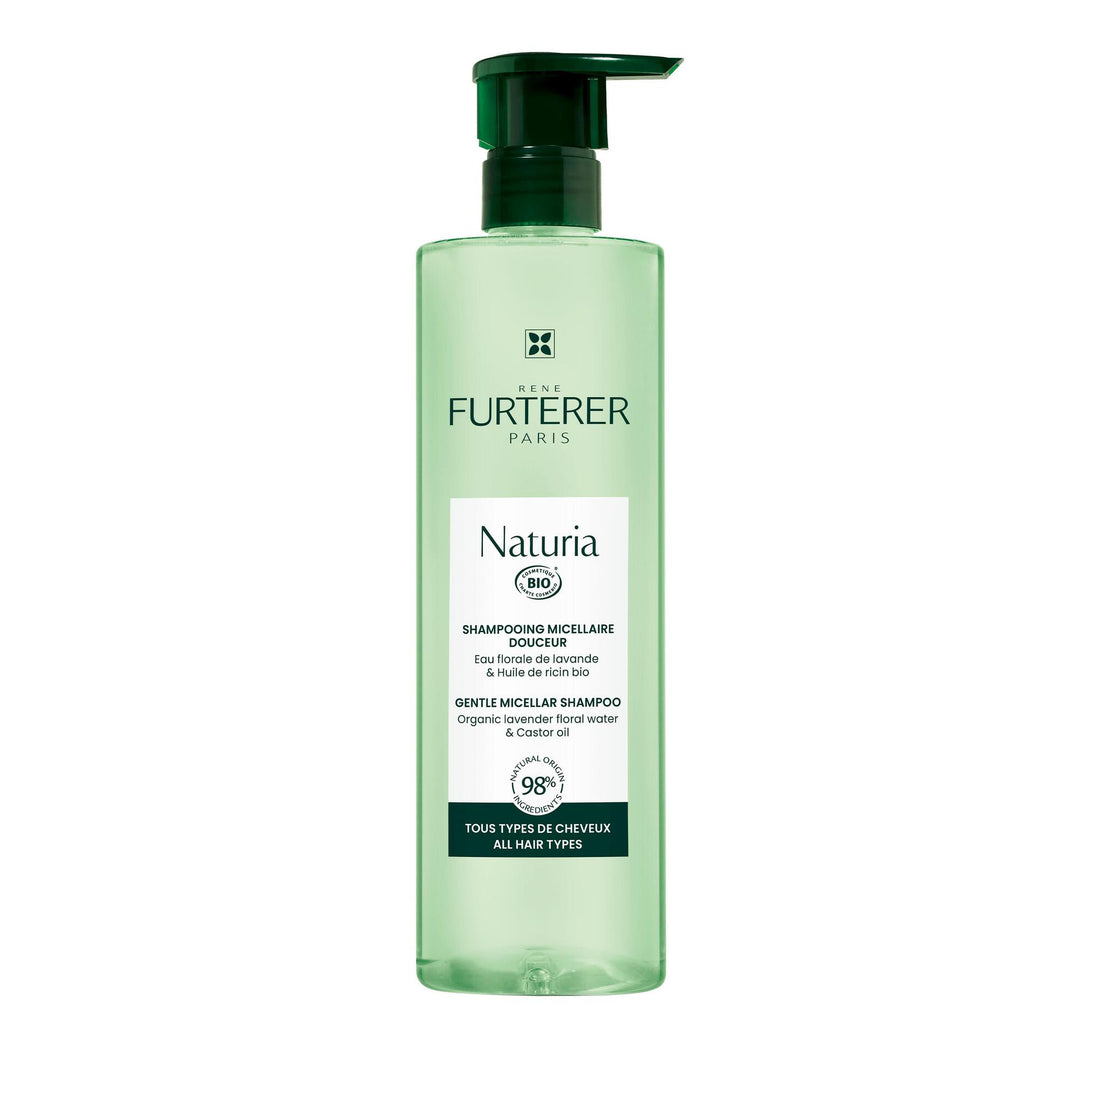 René Furterer Naturia Gentle Micellar Shampoo 400ml (13.52 fl oz)